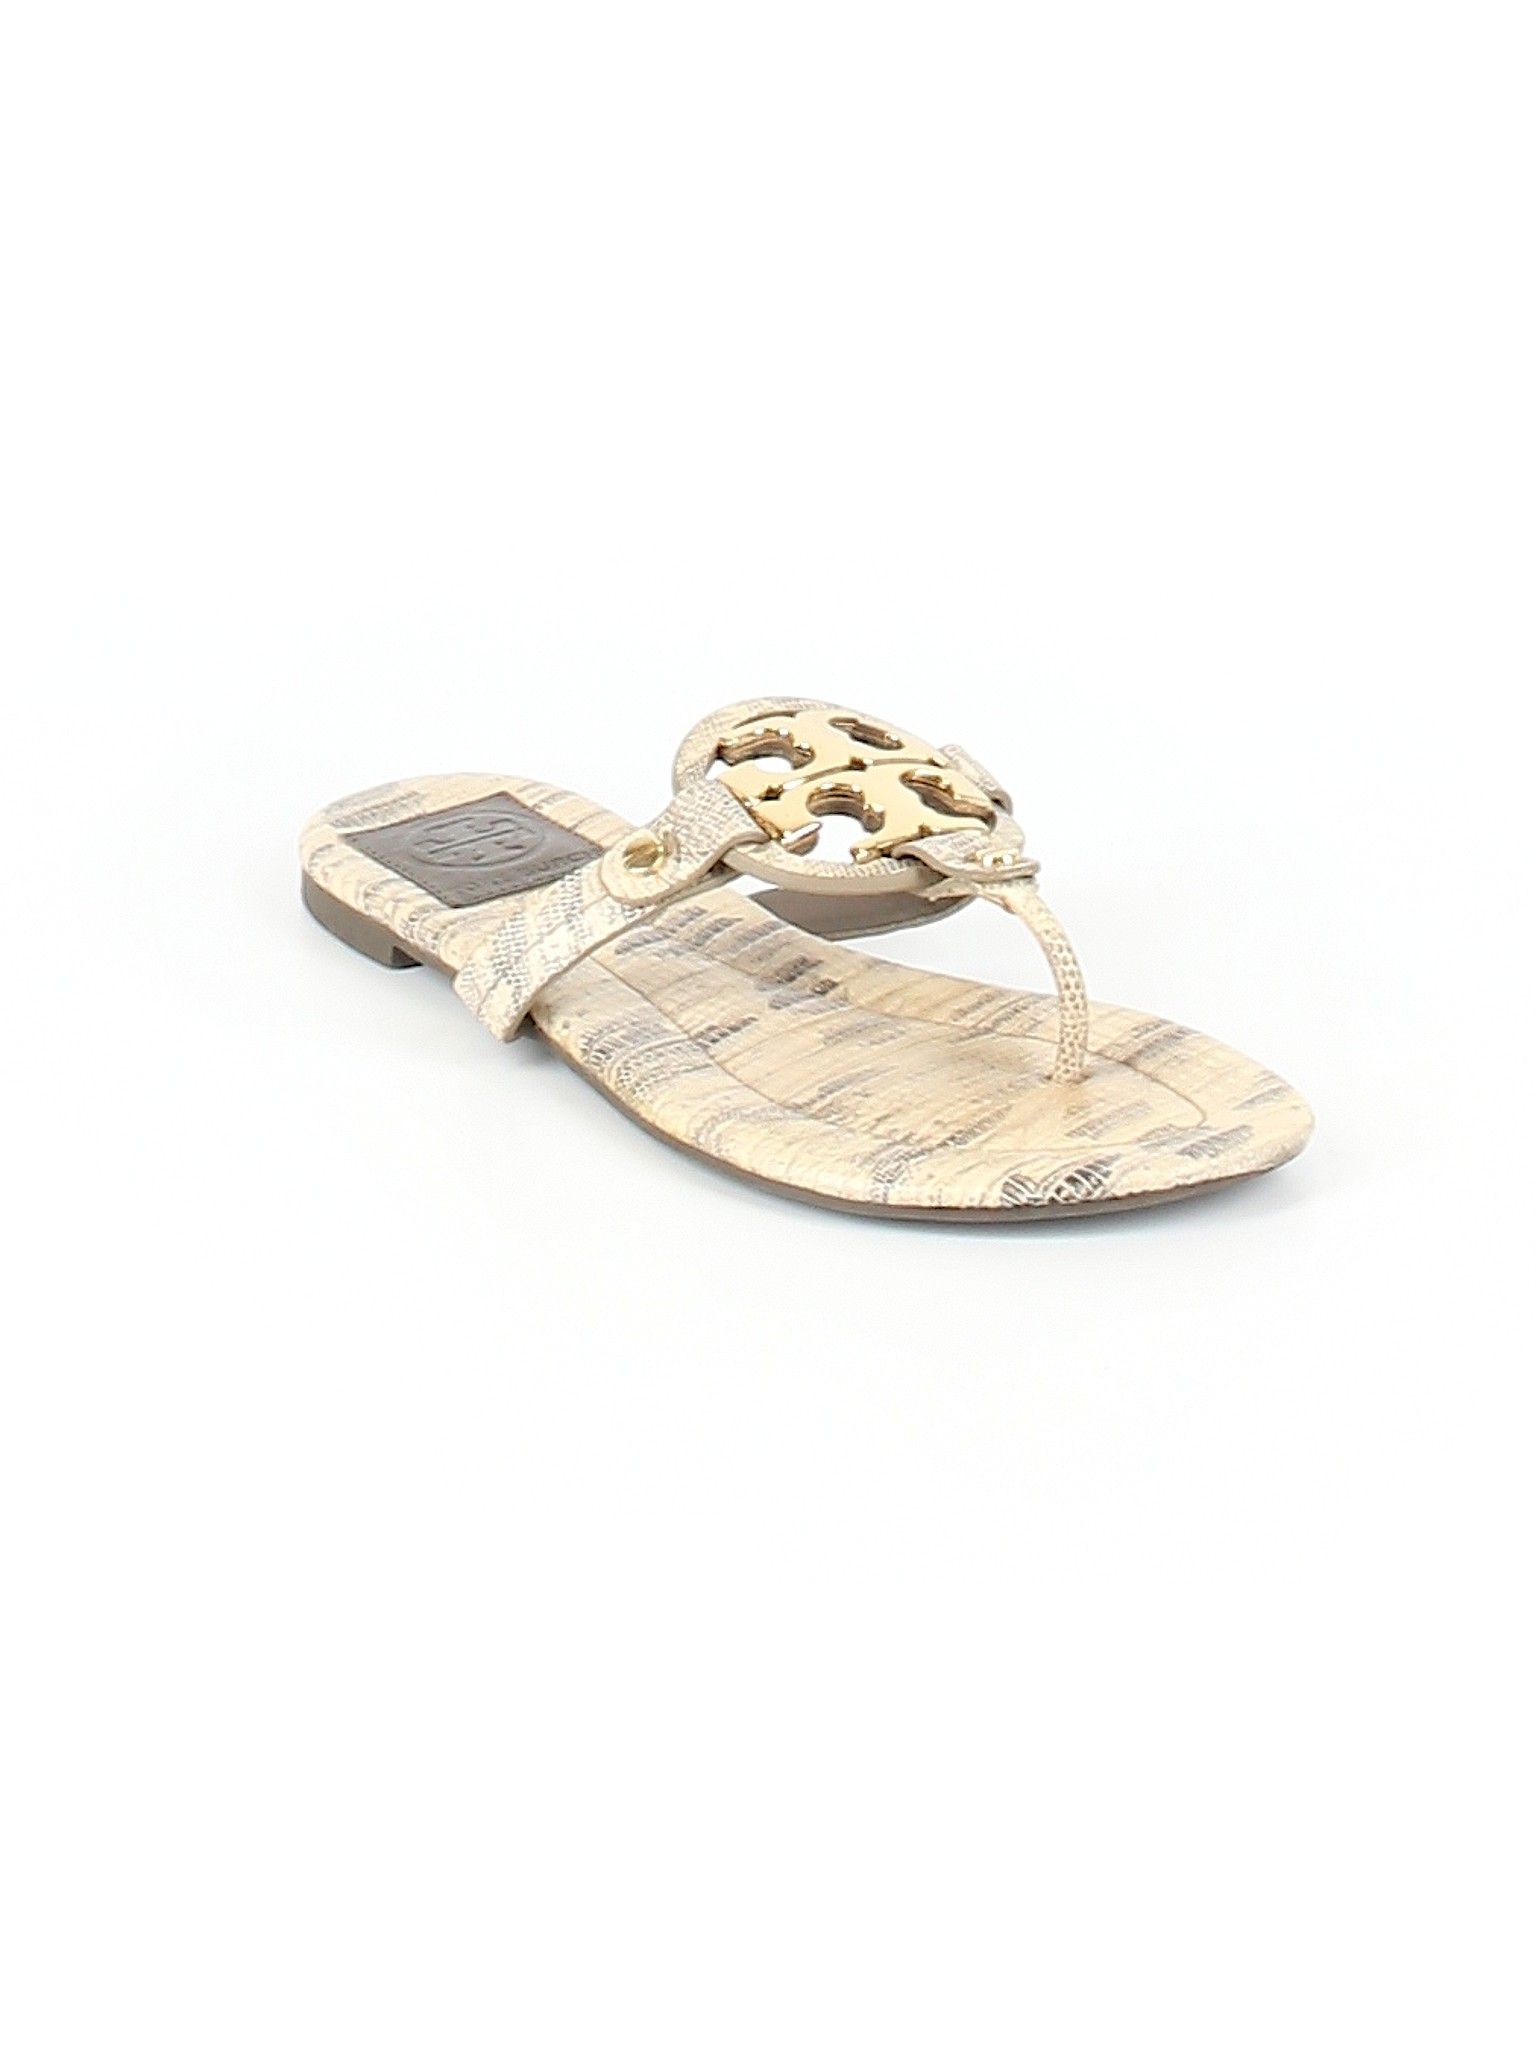 Tory Burch Sandals Size 5 1/2: Tan Women's Clothing - 54542126 | thredUP